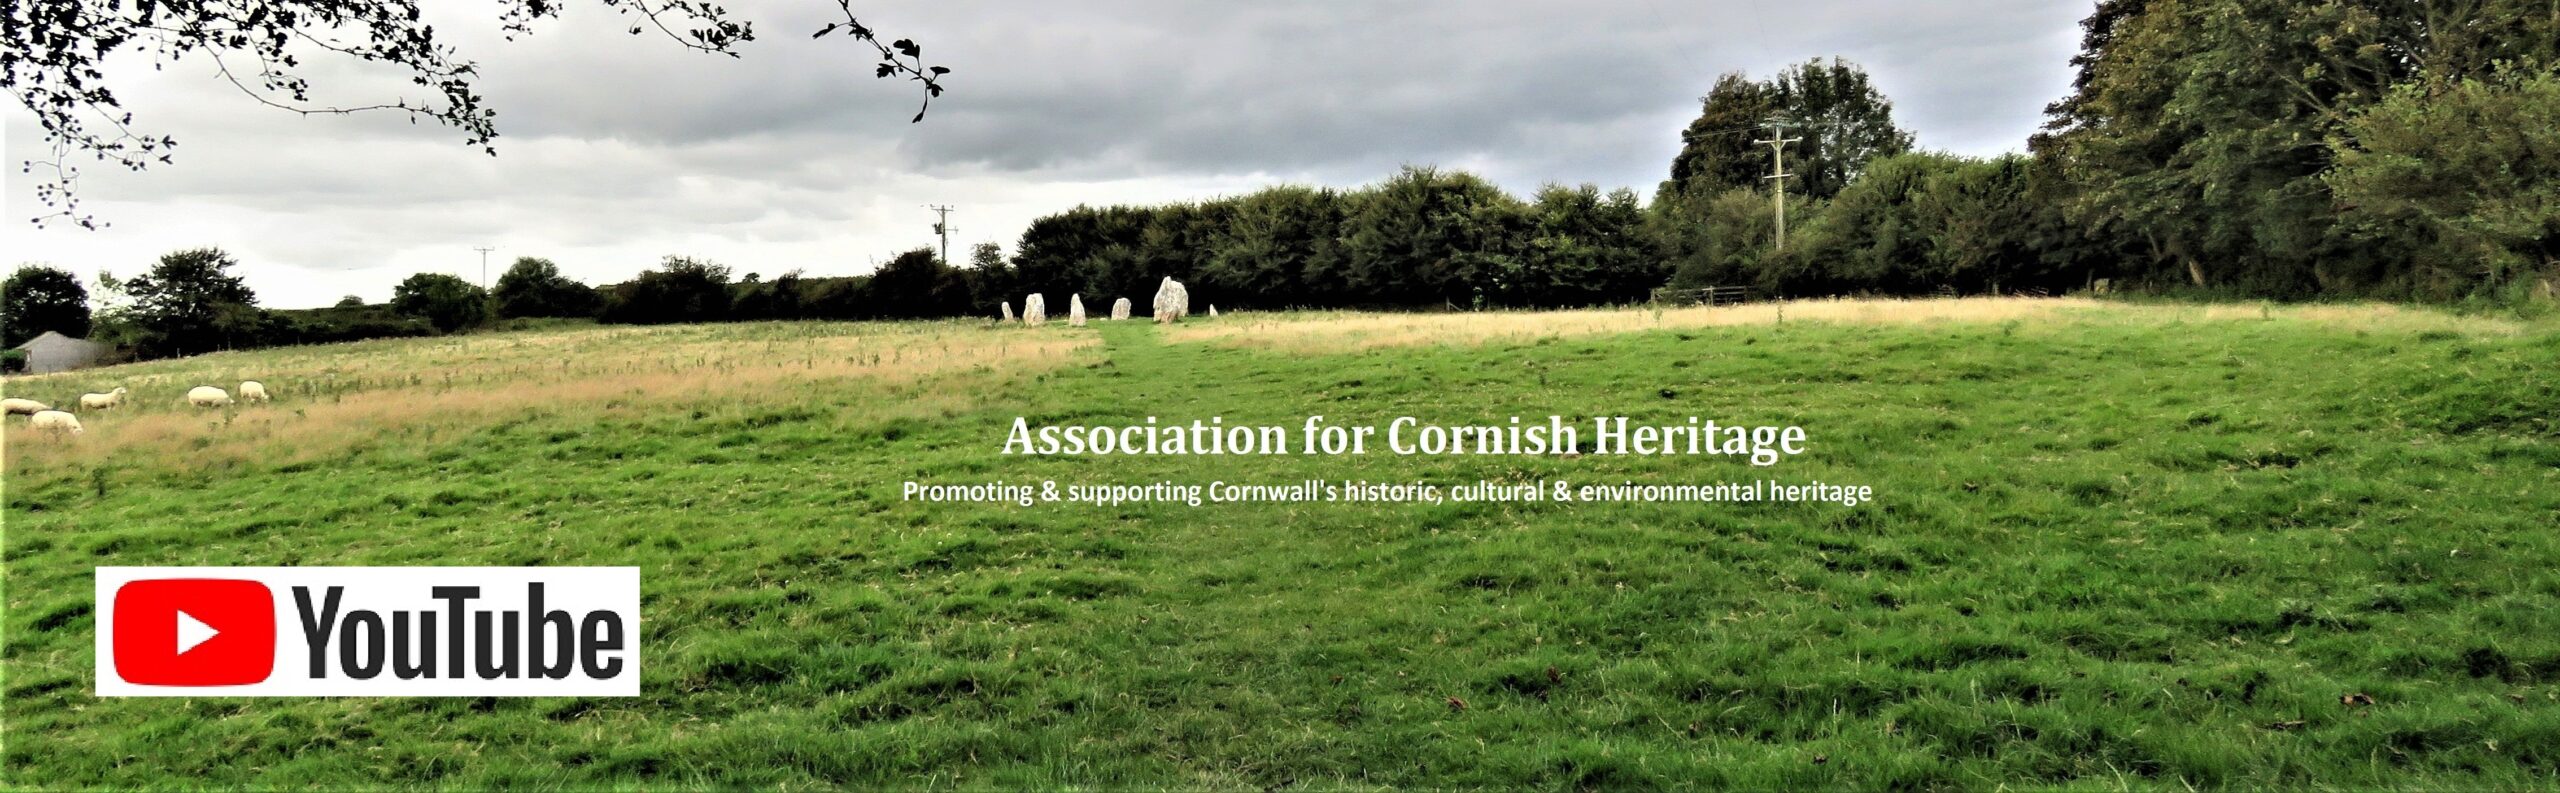 Sharing Cornish Heritage Online